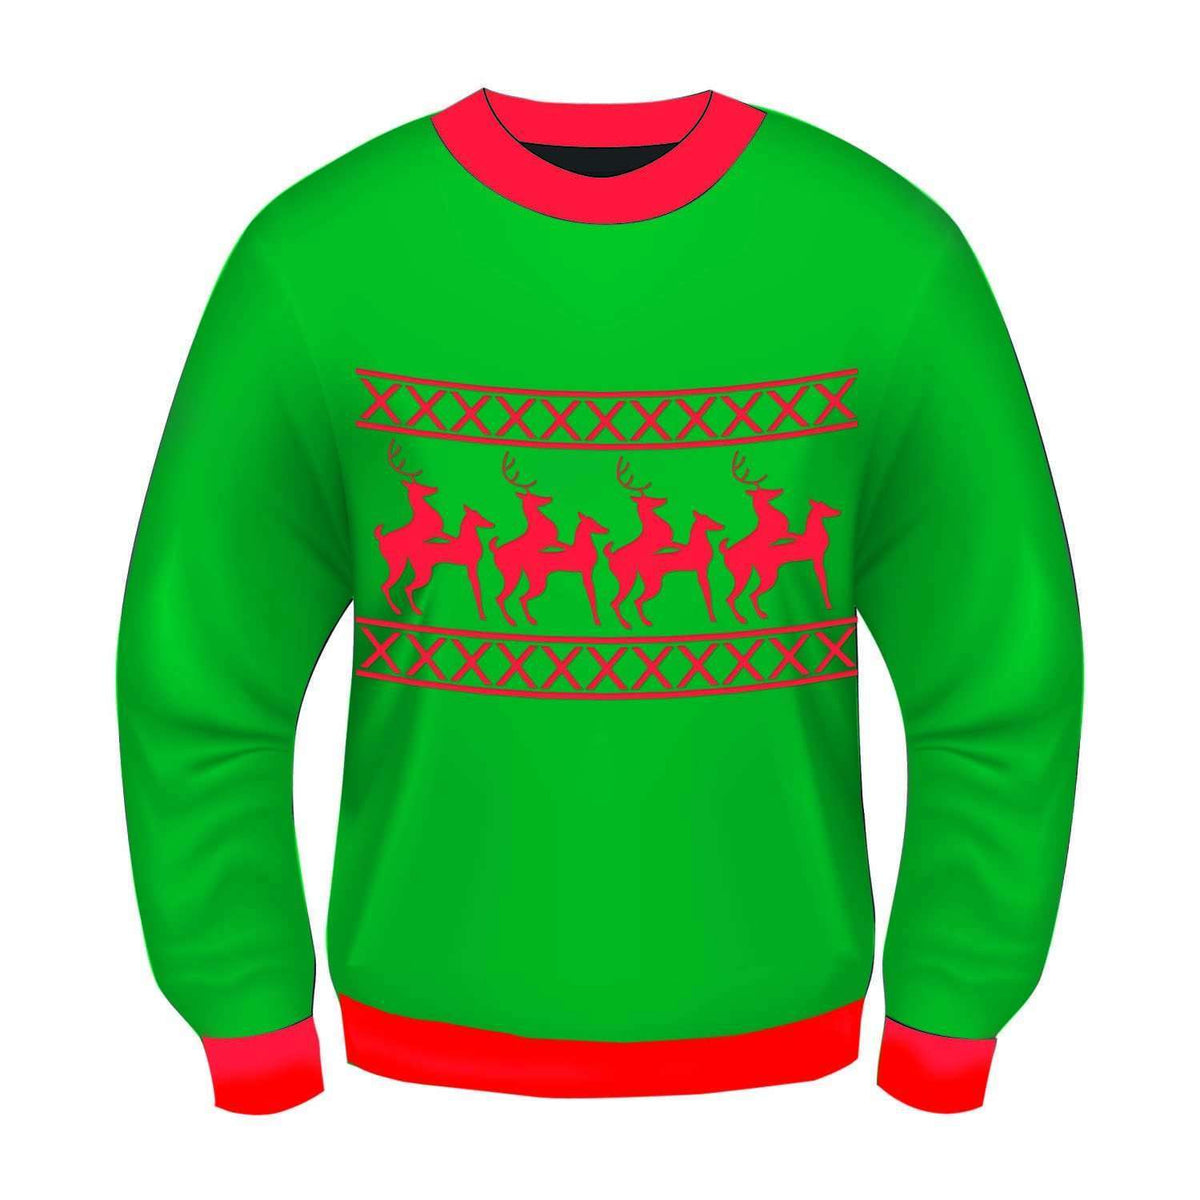 Reindeer Games Sweater-Standard Size